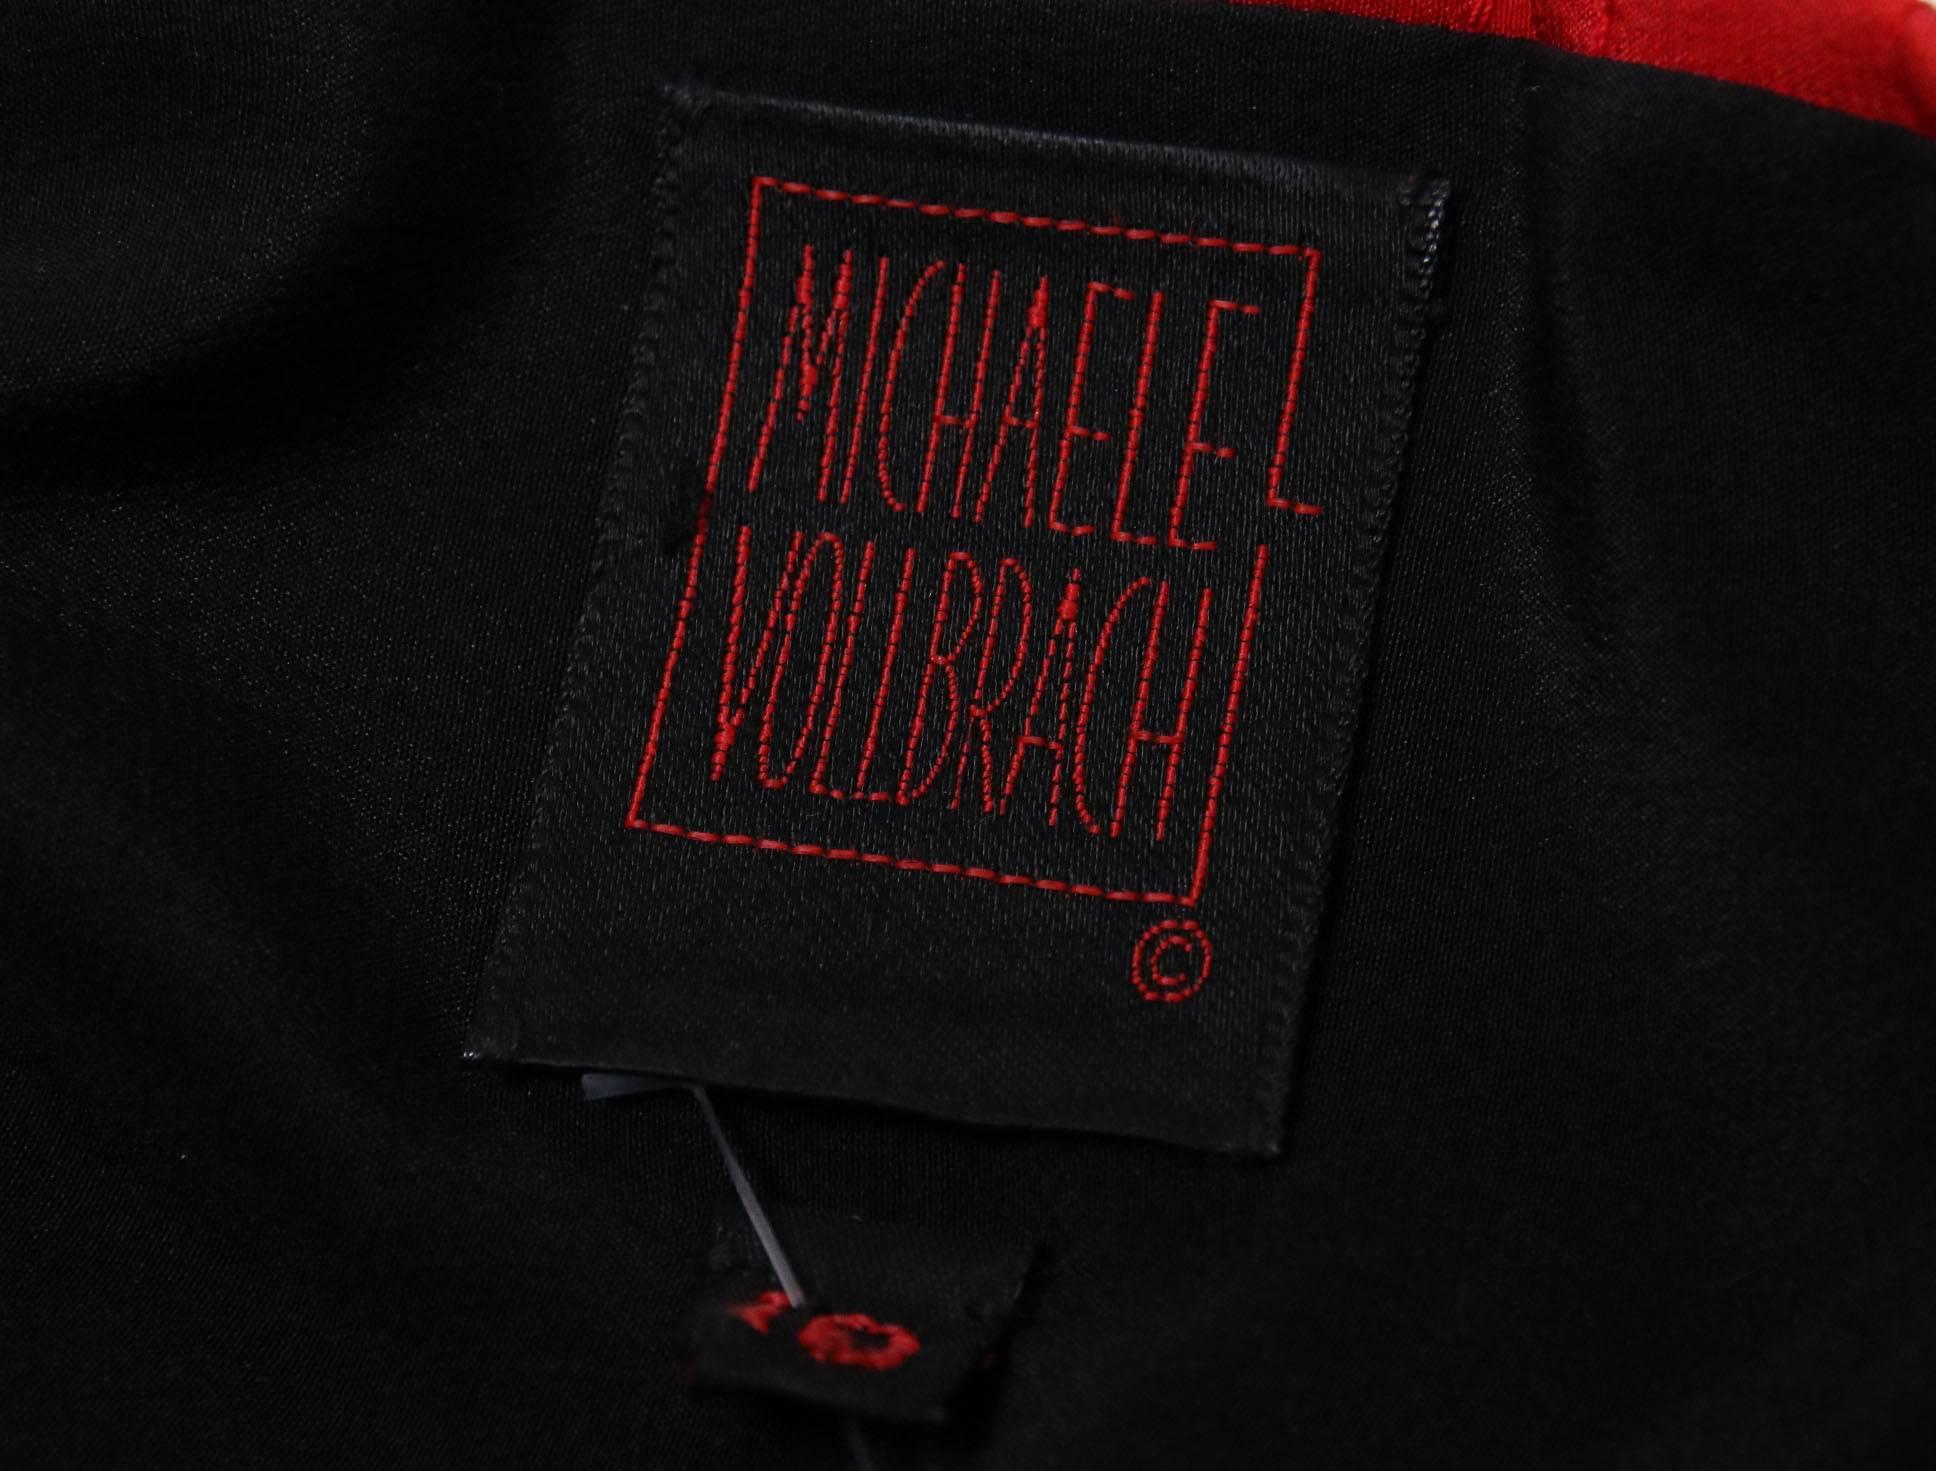 Women's Michaele Vollbracht Quilted Silk Tunic Caftan Dress Top w/Abstract Print